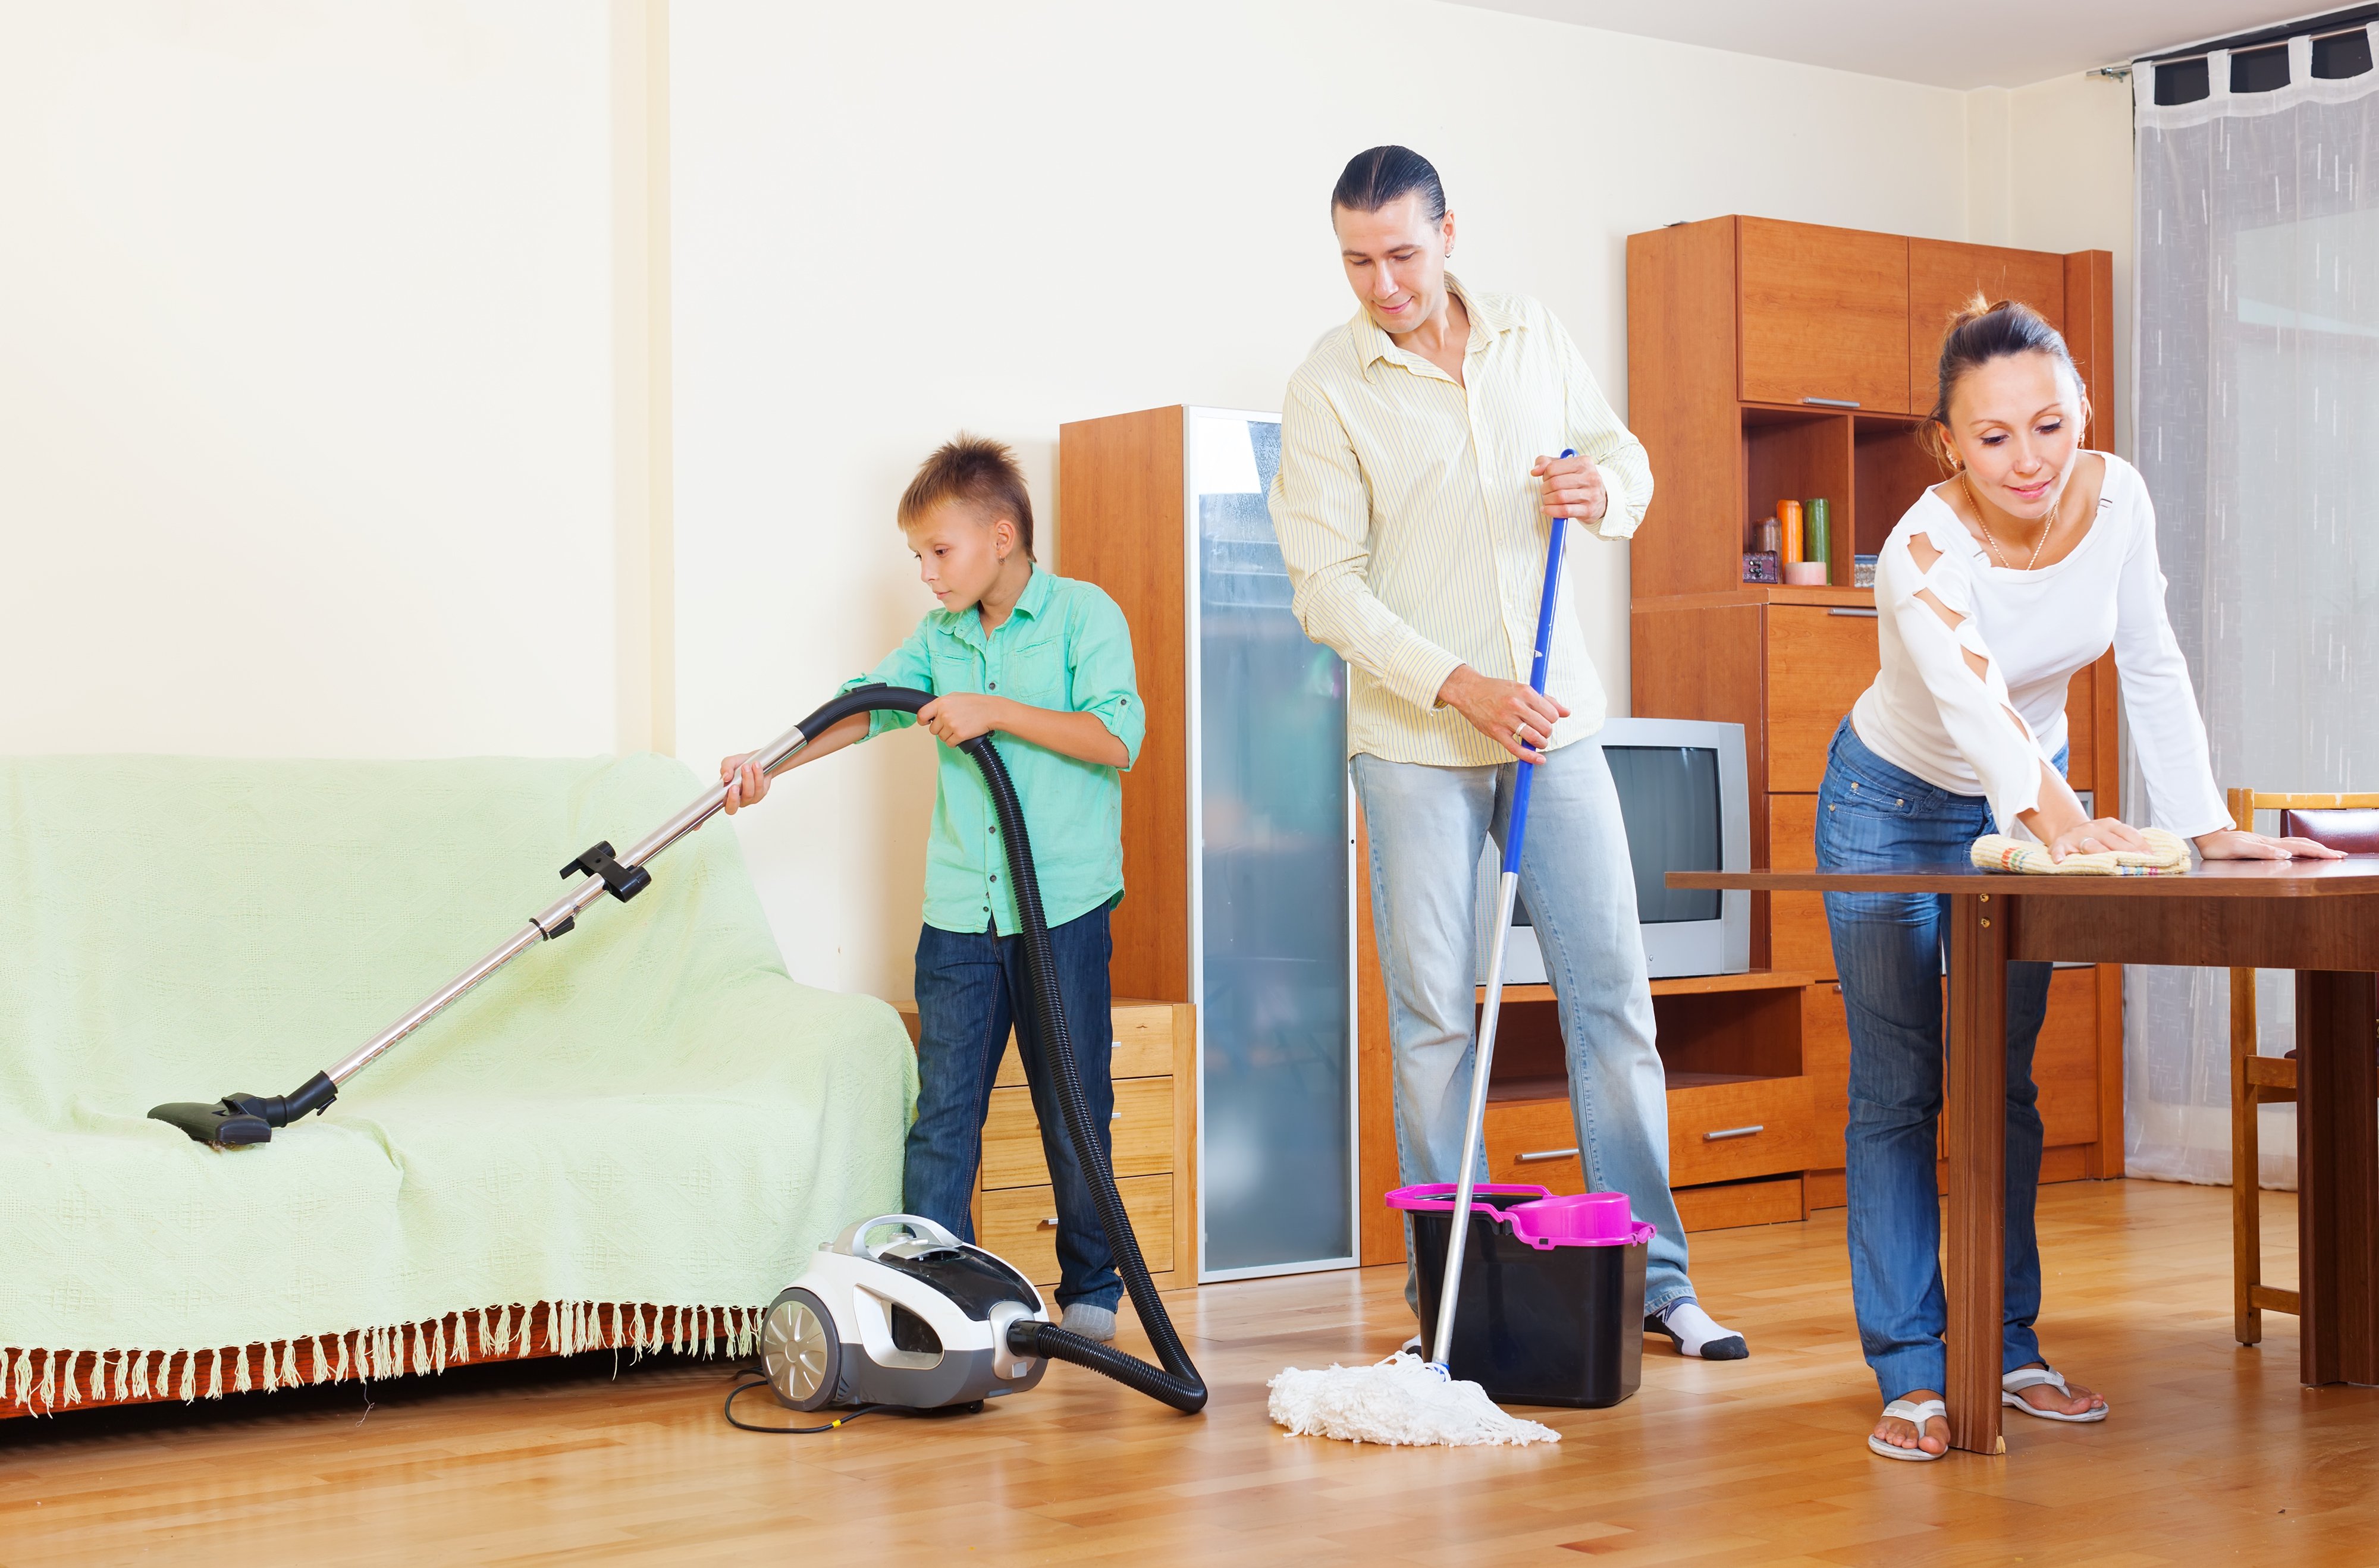 Familia realizando tareas domésticas junta. | Foto: Shutterstock